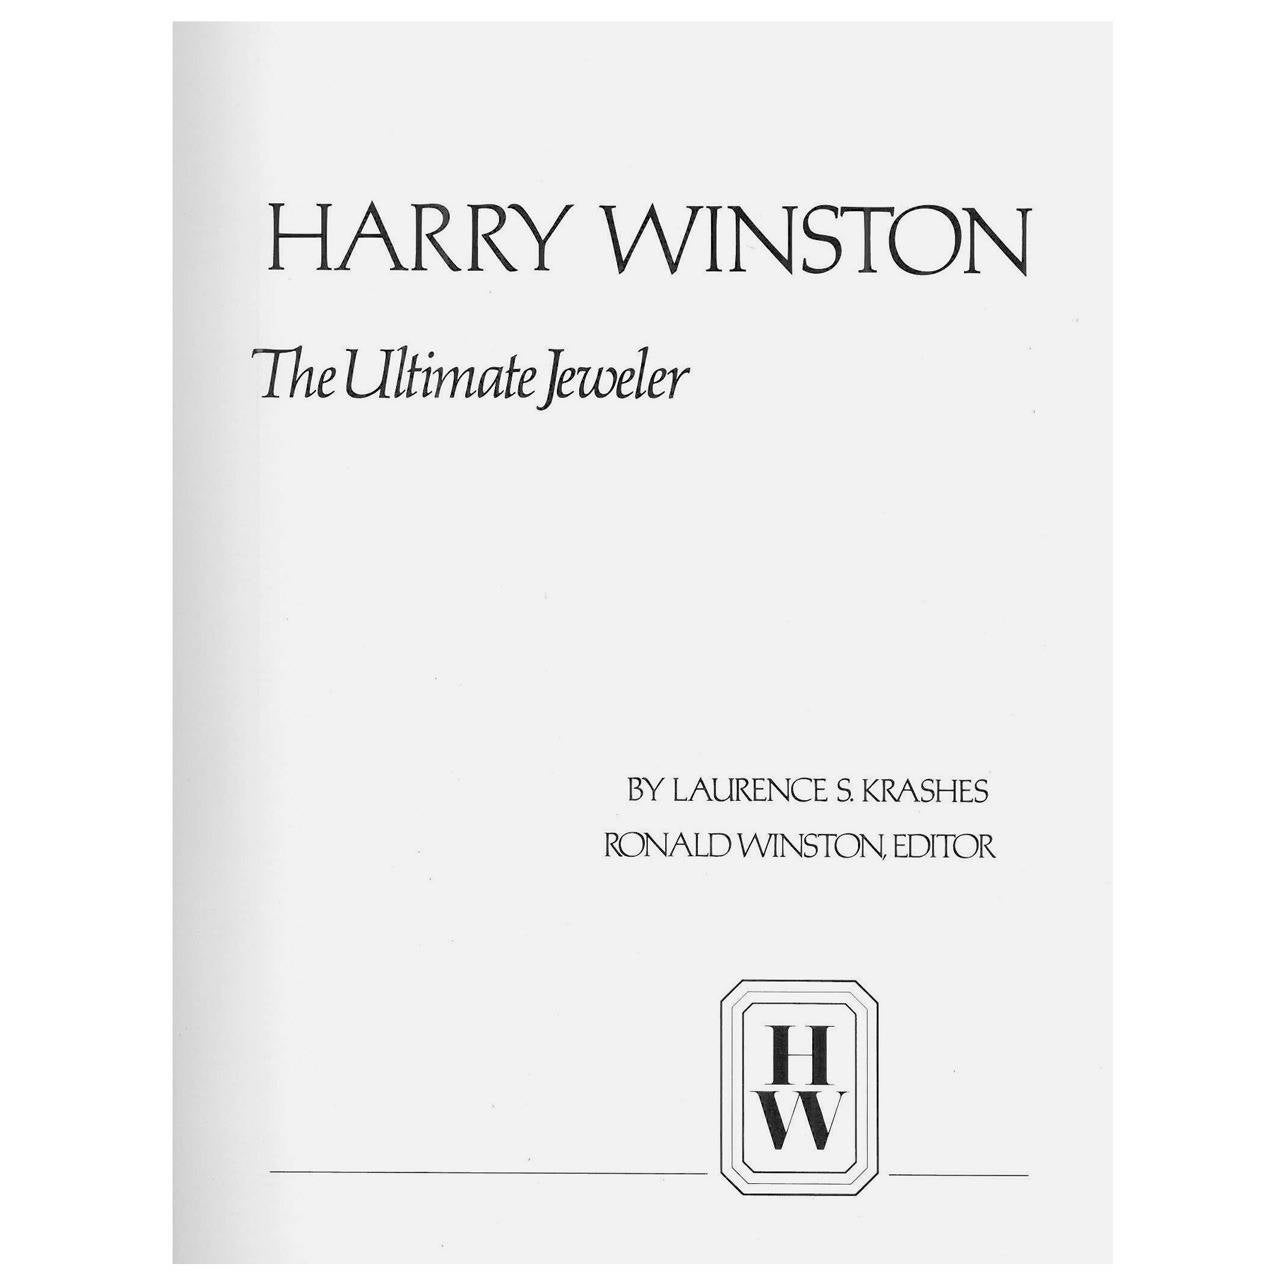 Book of HARRY WINSTON The Ultimate Jeweler